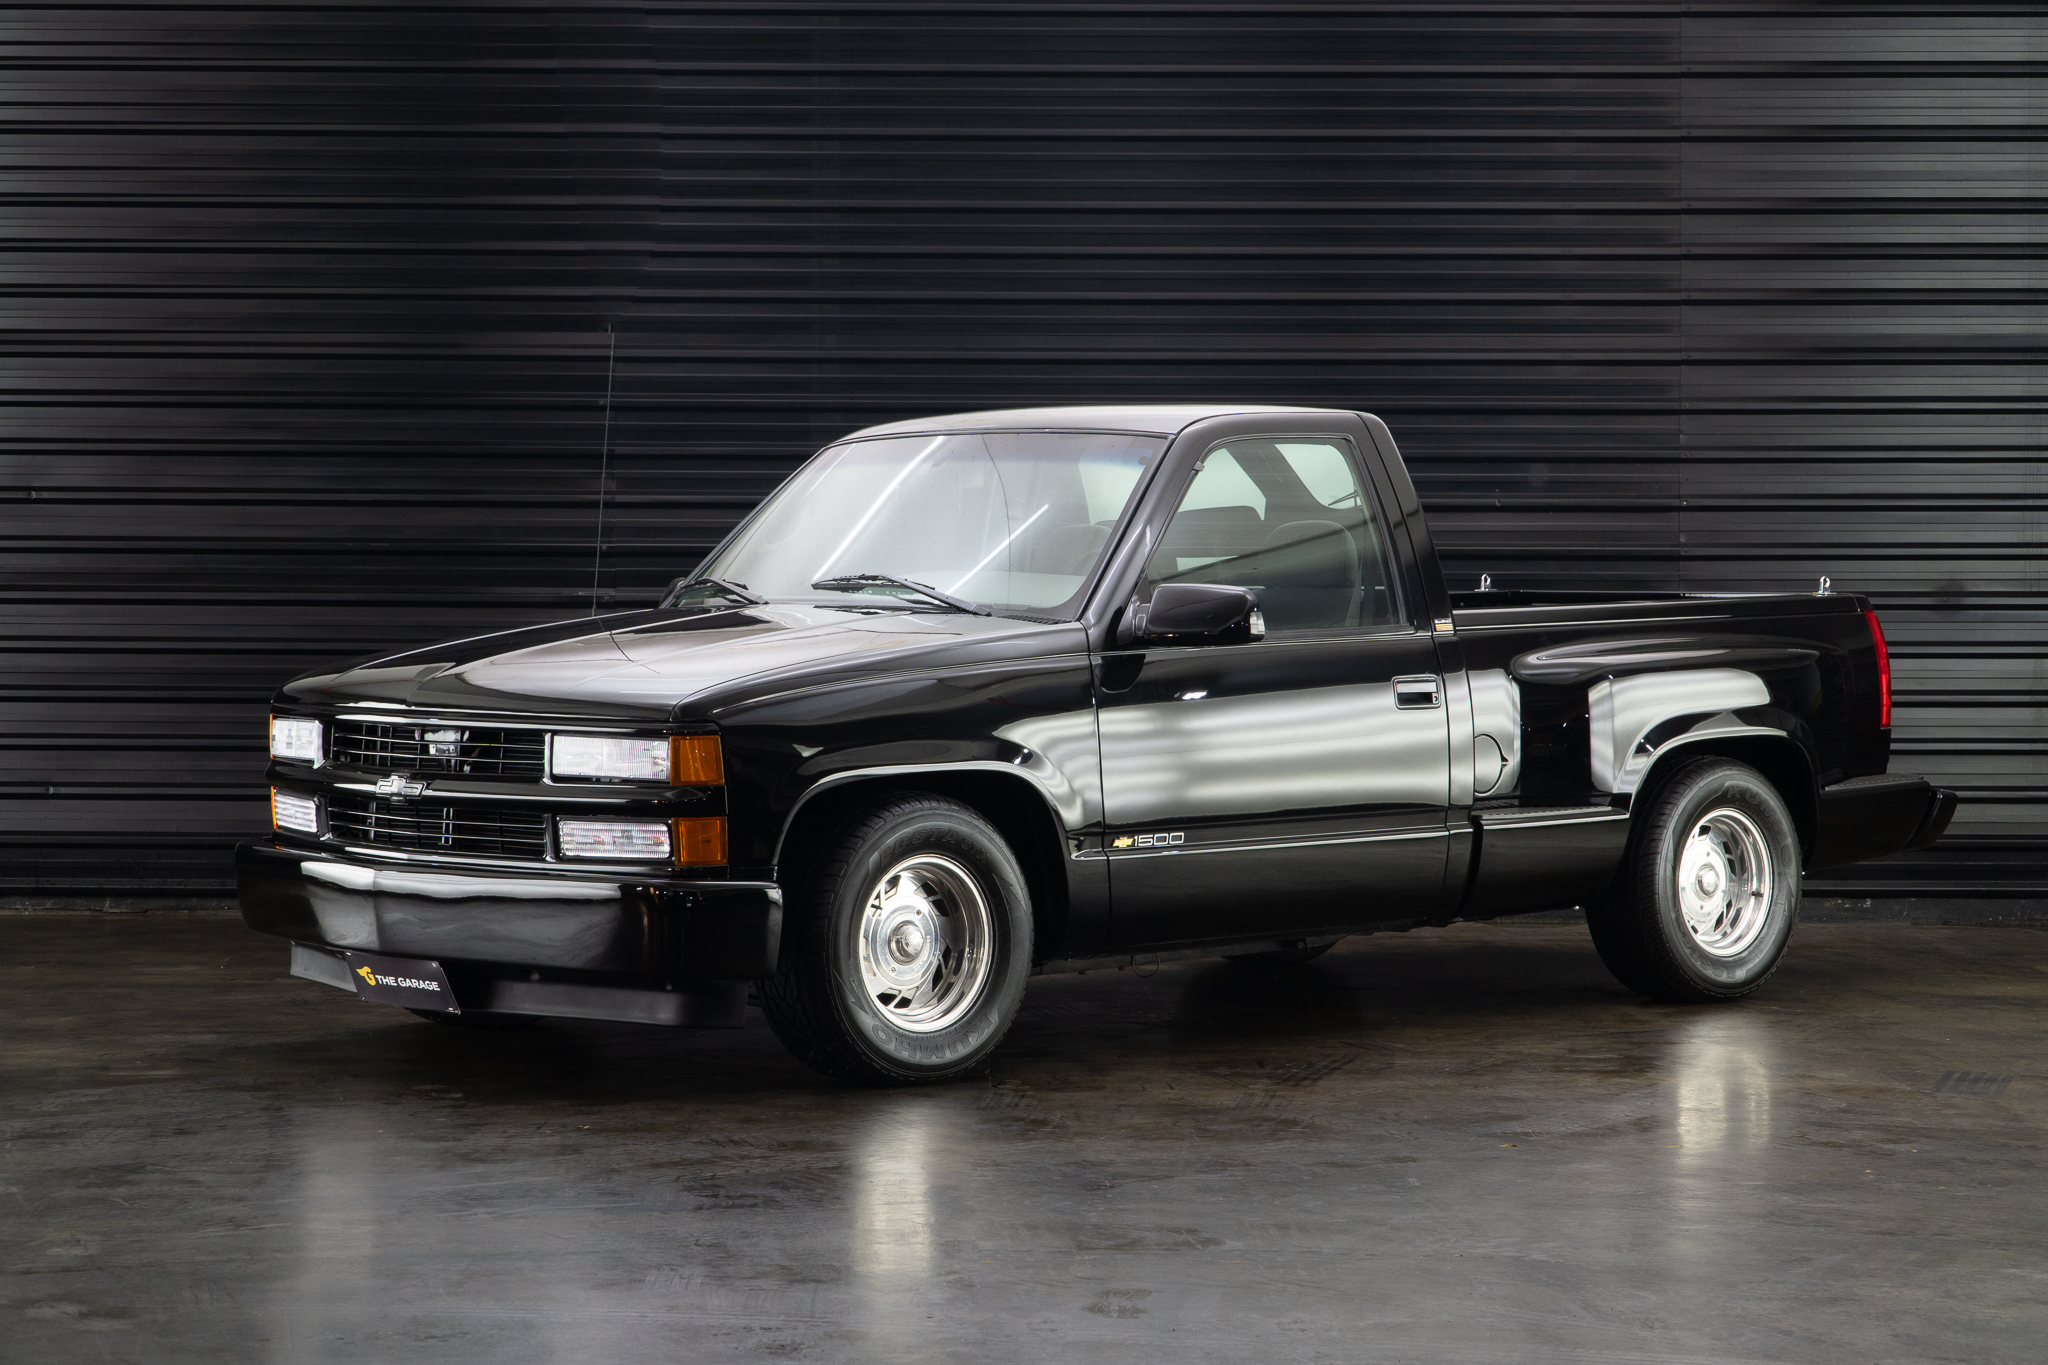 1996 Chevrolet Silverado 1500 a venda for sale the garage